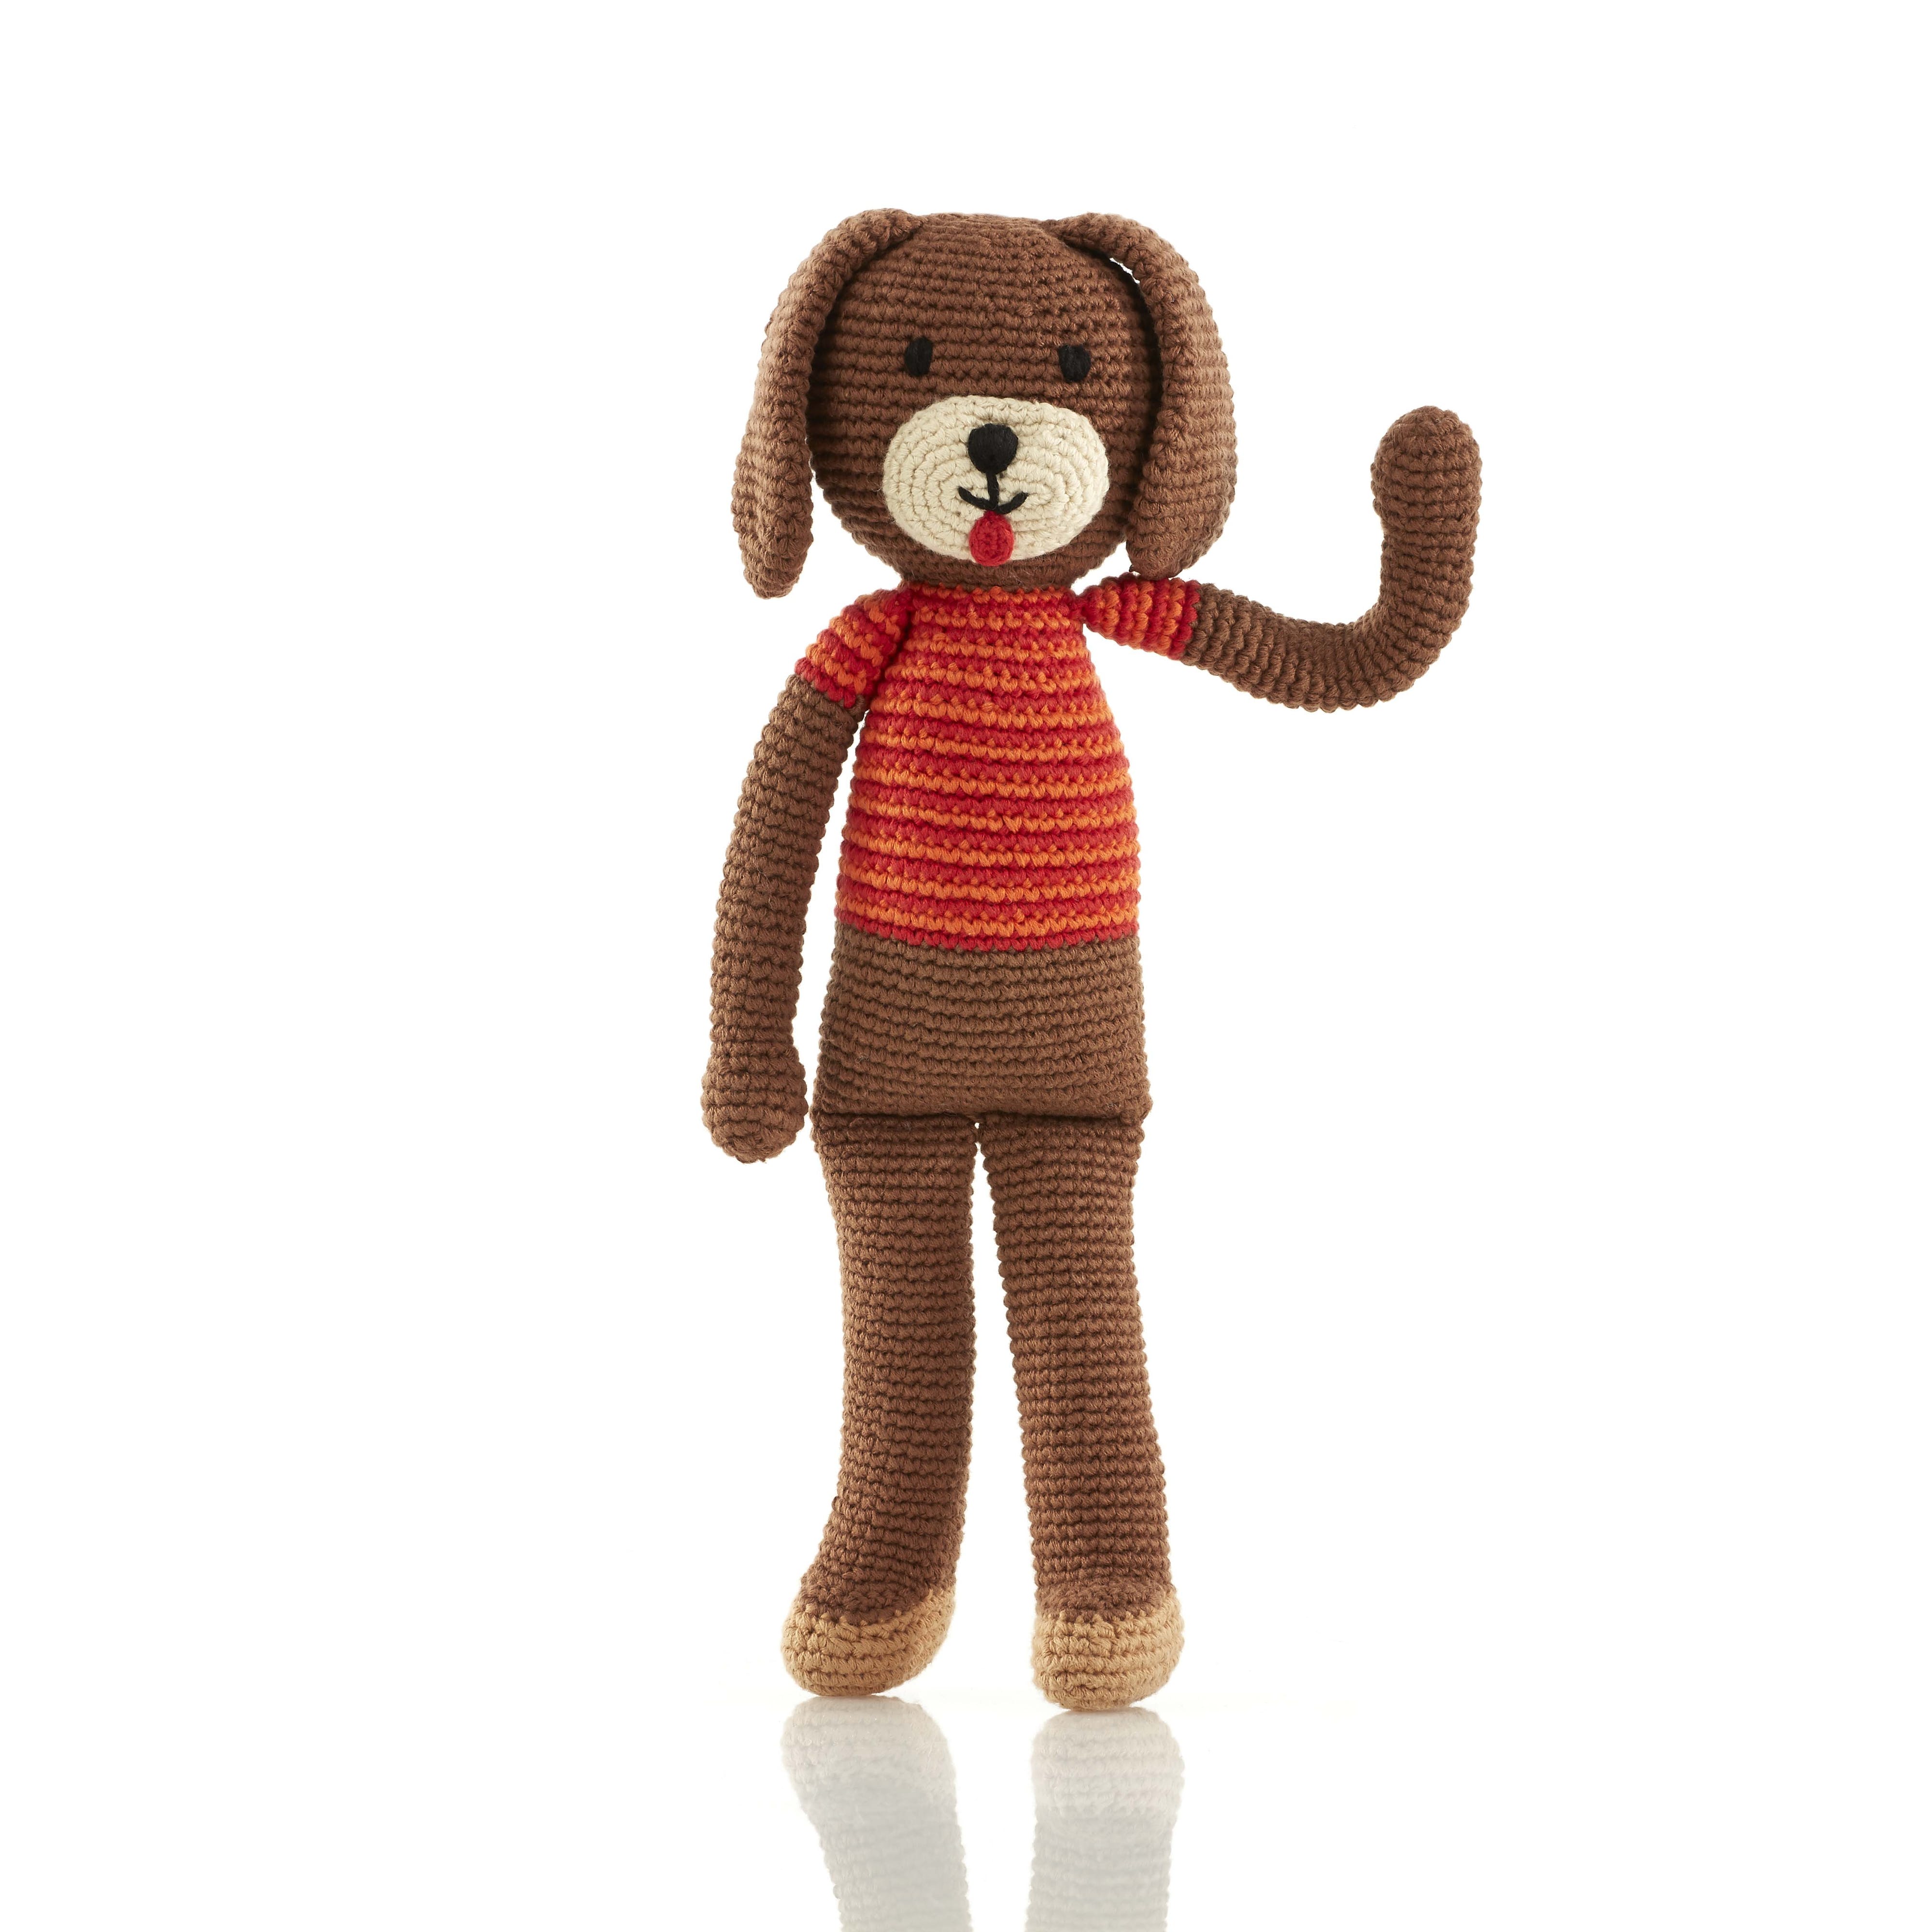 Pebblechild Dog Boy Knitted Soft Toy